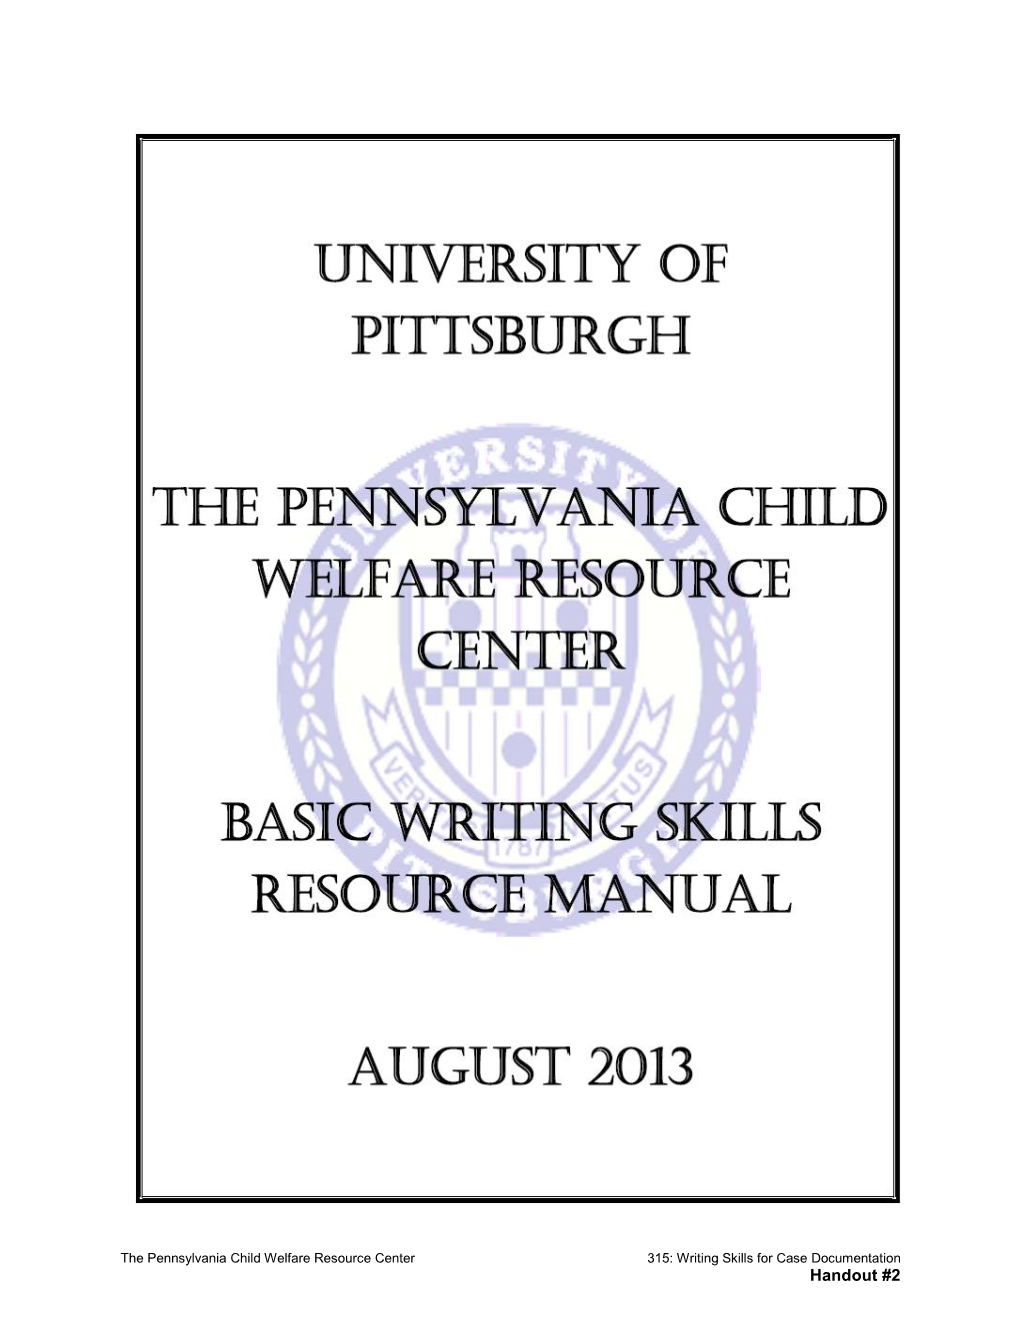 Handout 2: Basic Writing Skills Resource Guide